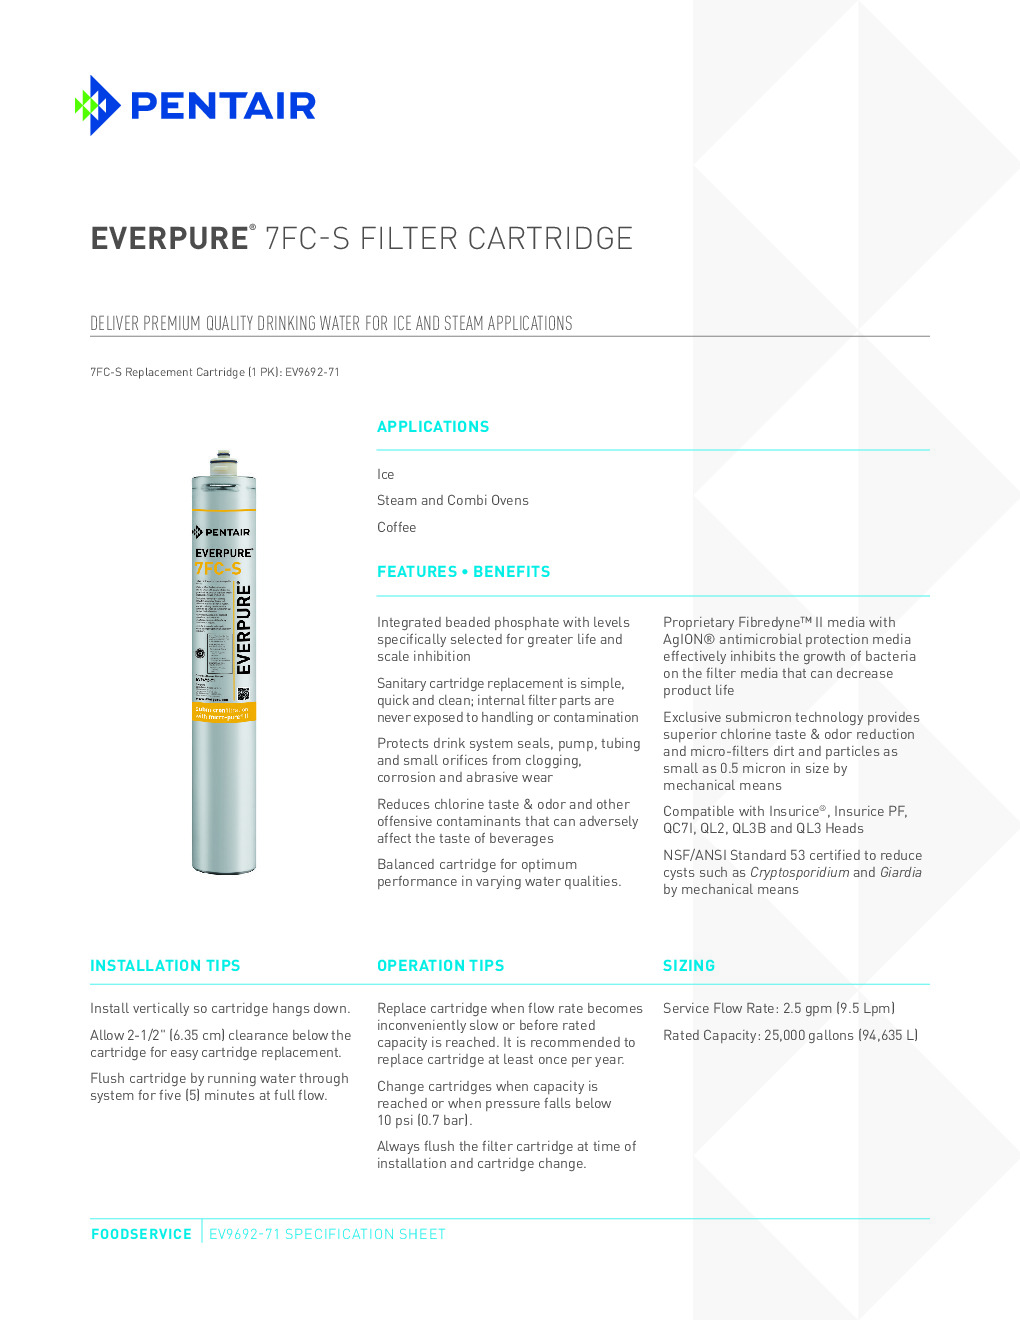 Everpure EV969271 Cartridge Water Filtration System